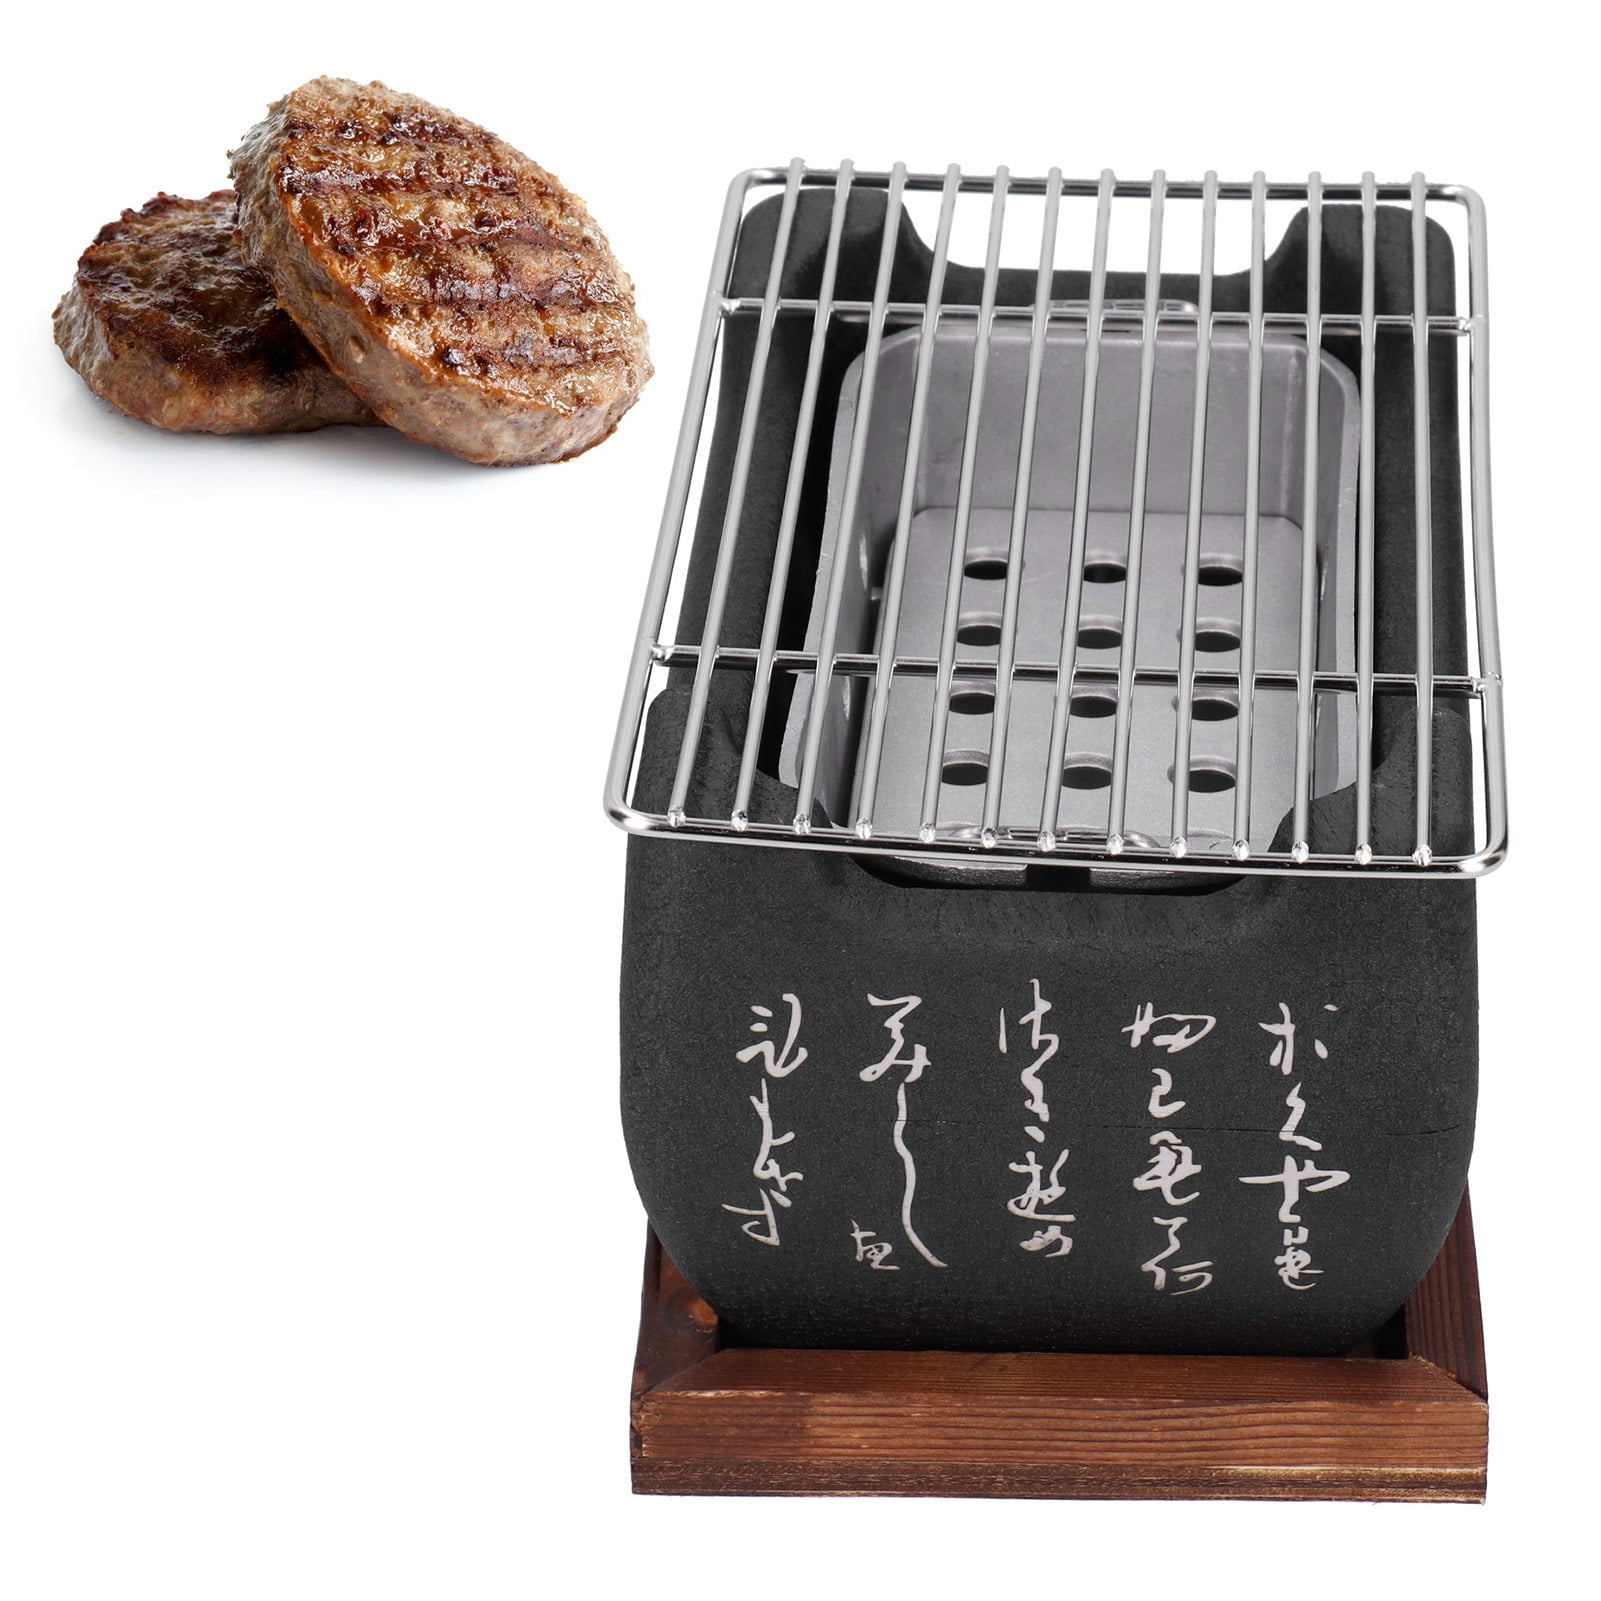 Mini Portable Japanese BBQ Grill Aluminium Alloy Charcoal Grill